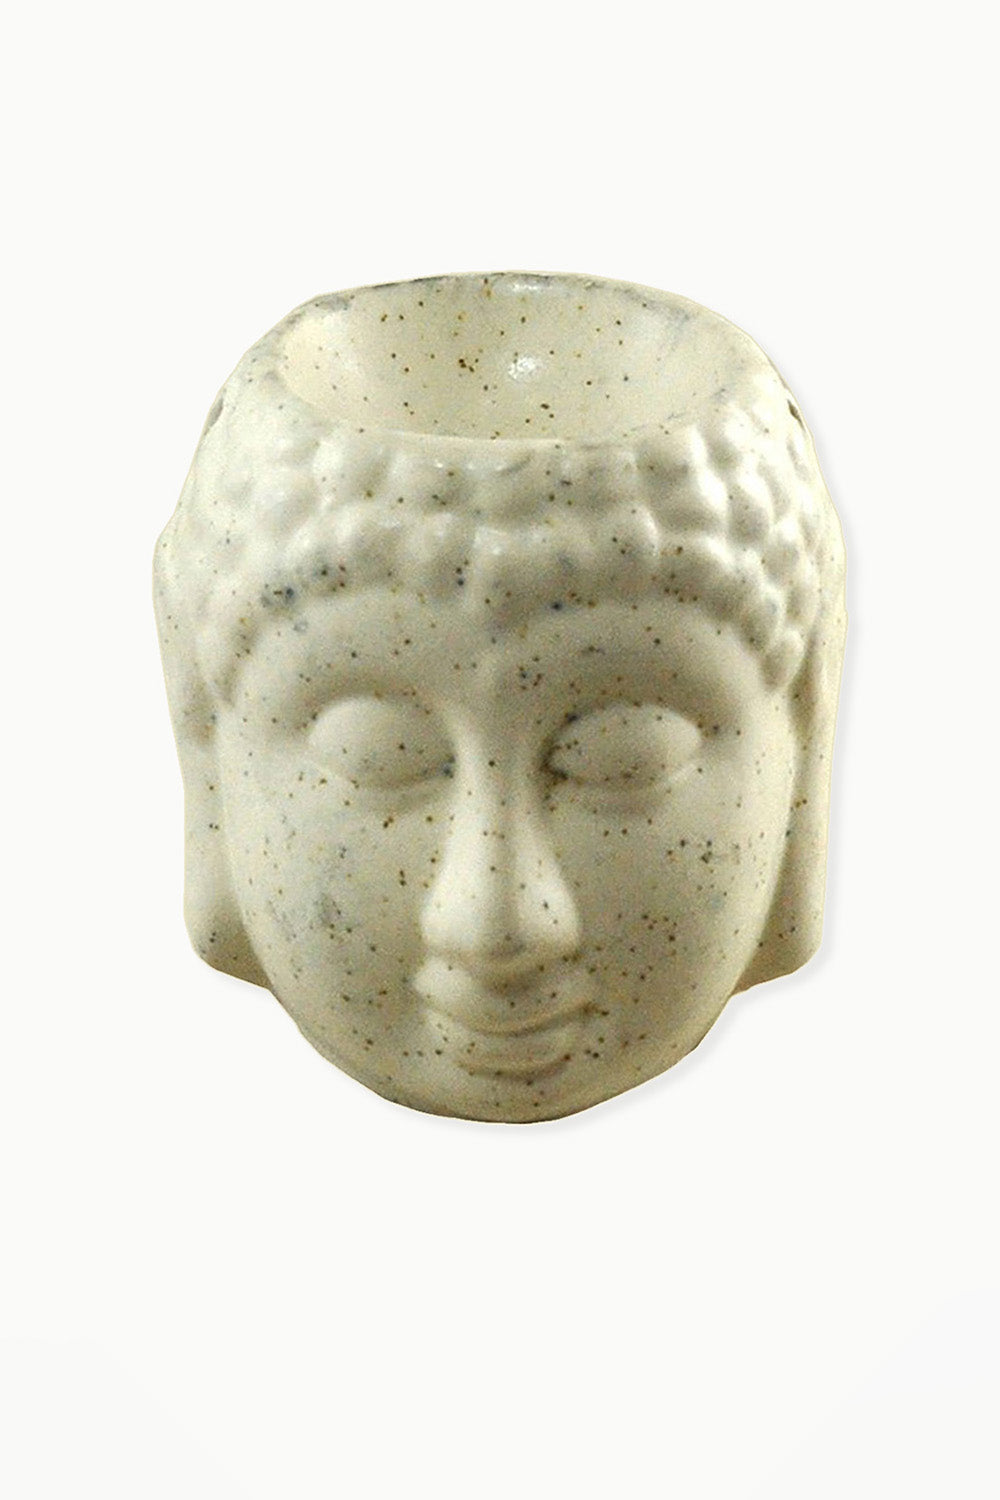 Serene Buddha Essential Oil Diffuser White Ceramic